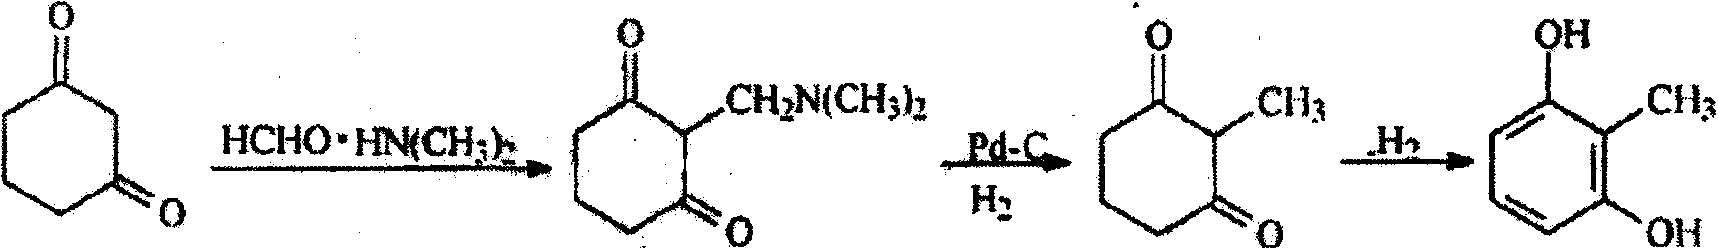 Synthesis method for 2, 6-dihydroxytoluene